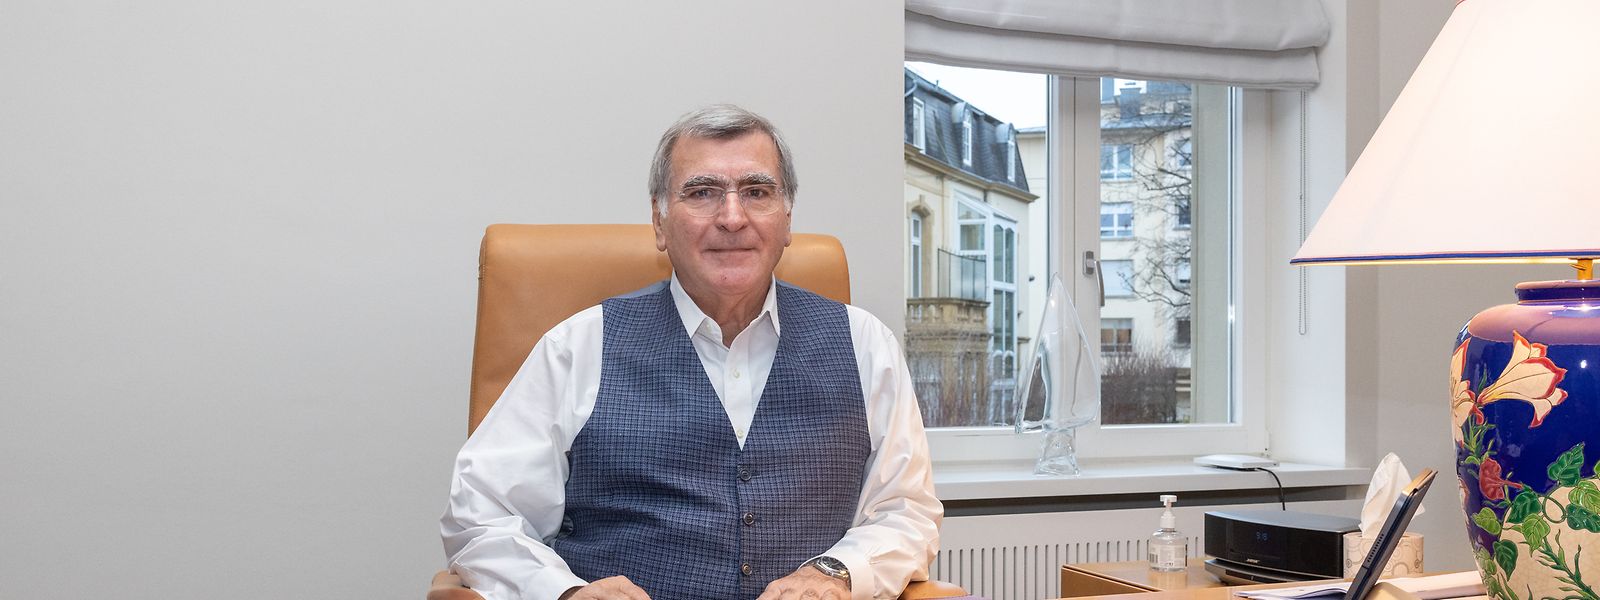 Charles Ruggieri à son bureau au siège de Batipart Invest.